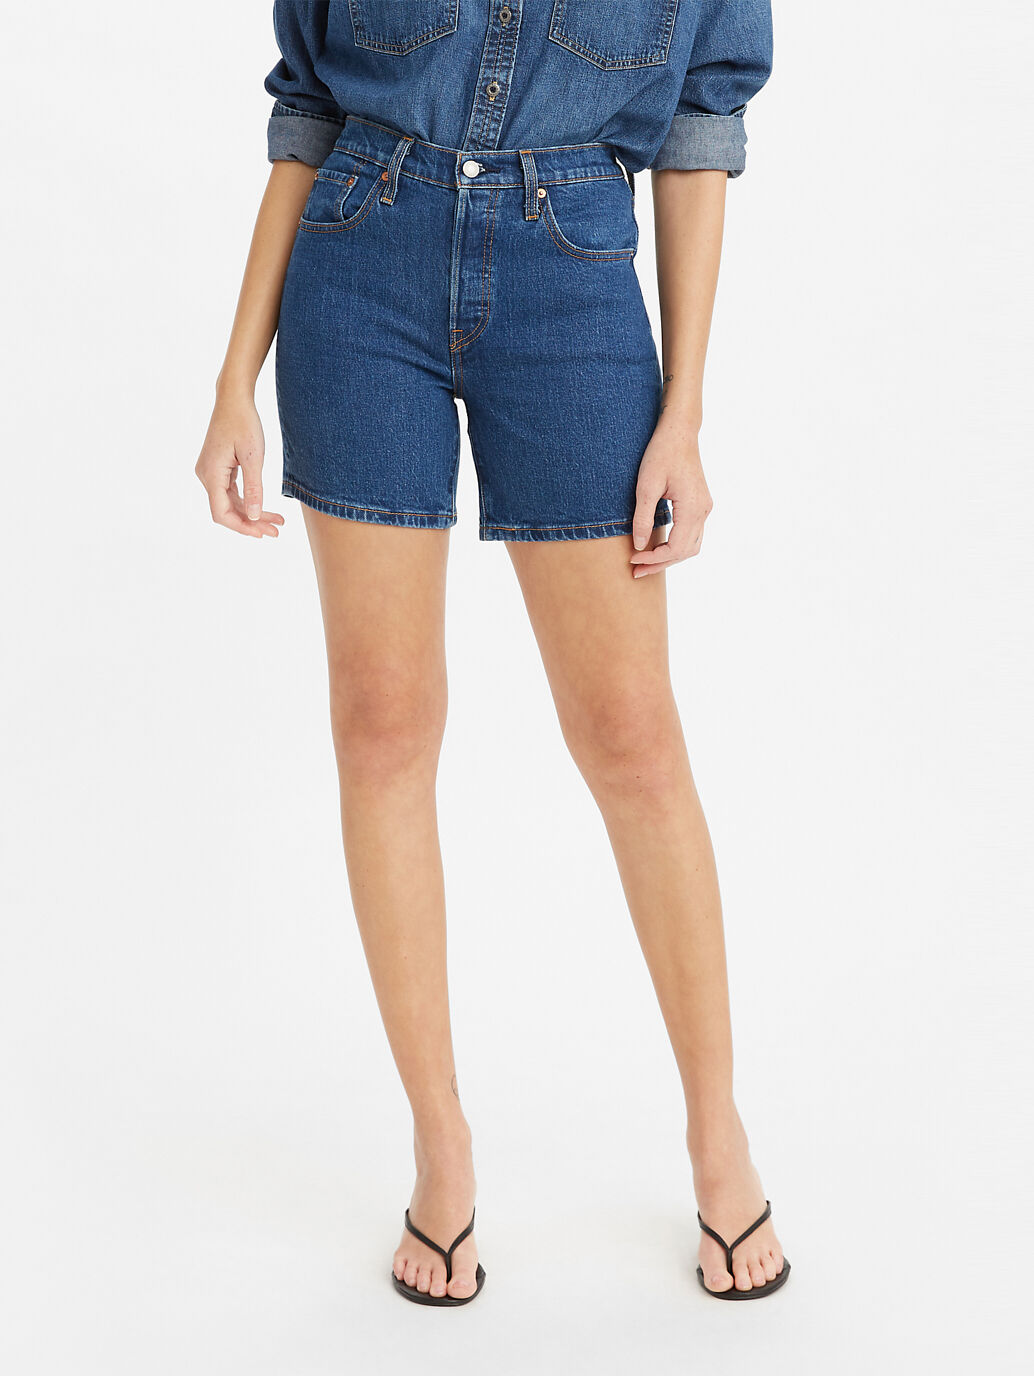 NEW Levi’s Women’s Shorts 27 Blue Medium Wash Short Jeans Mid Length Lost Blues 